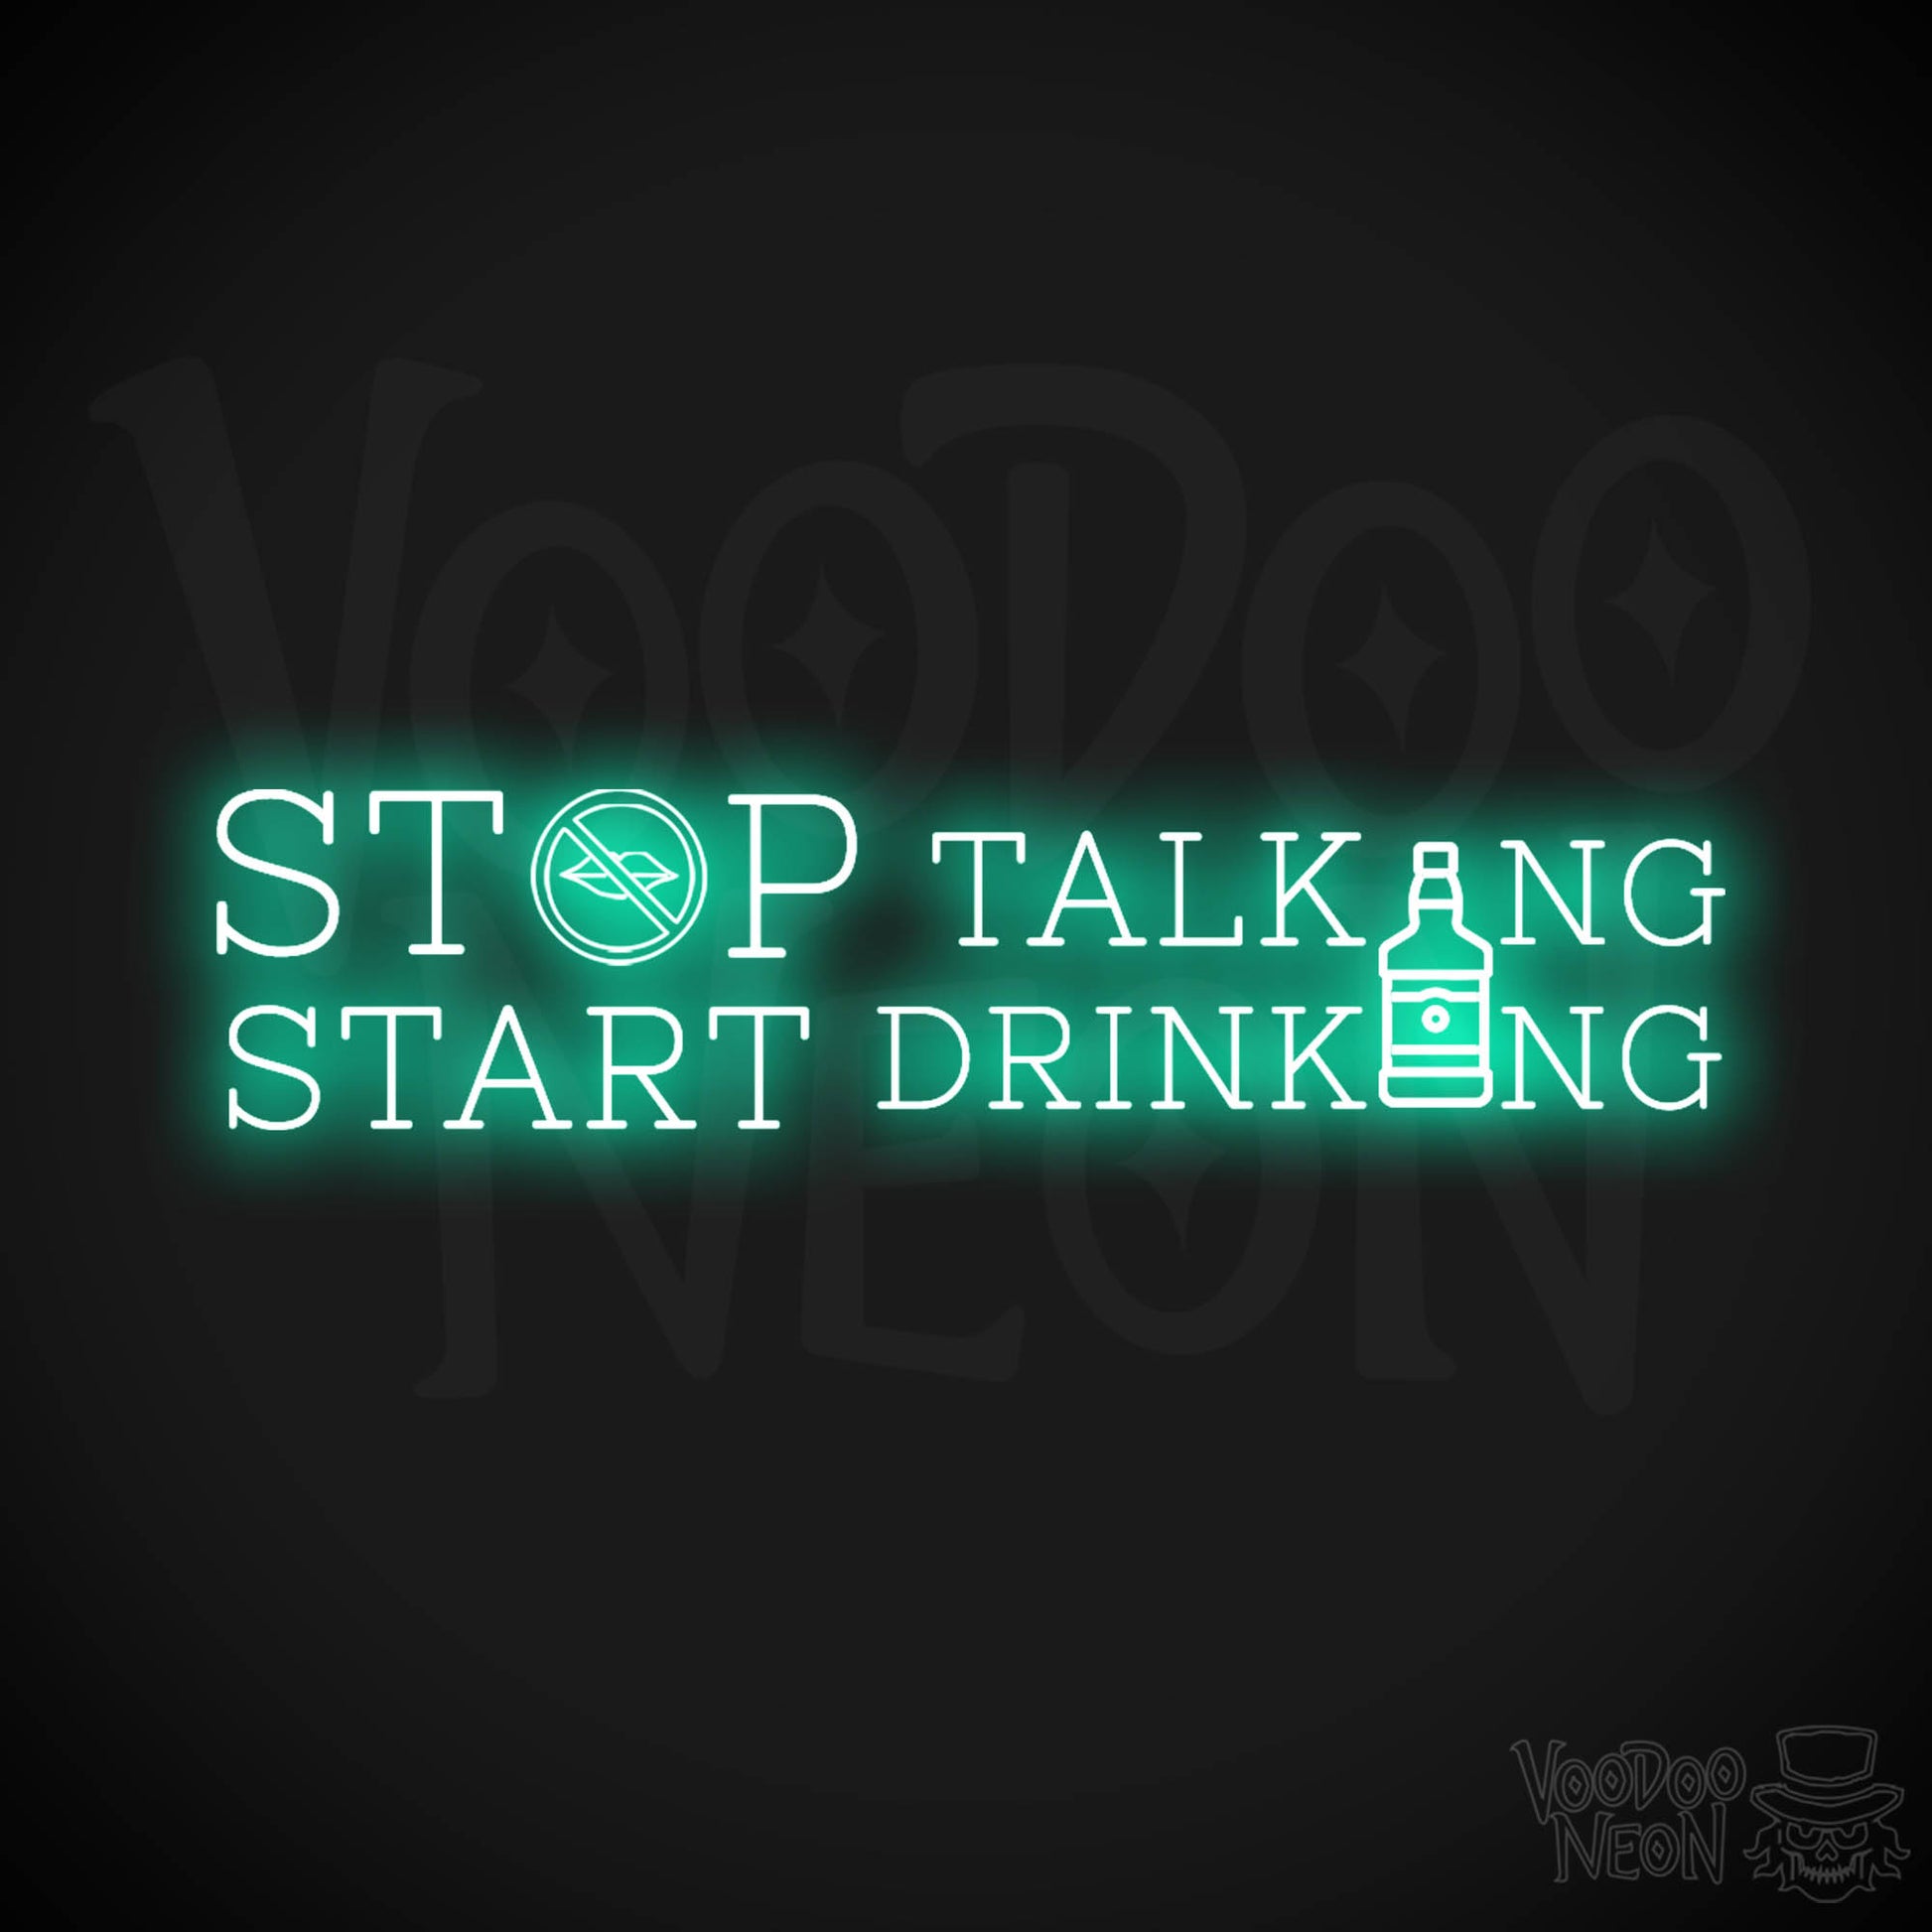 Stop Talking Start Drinking Neon Sign - Stop Talking Start Drinking Sign - Color Light Green